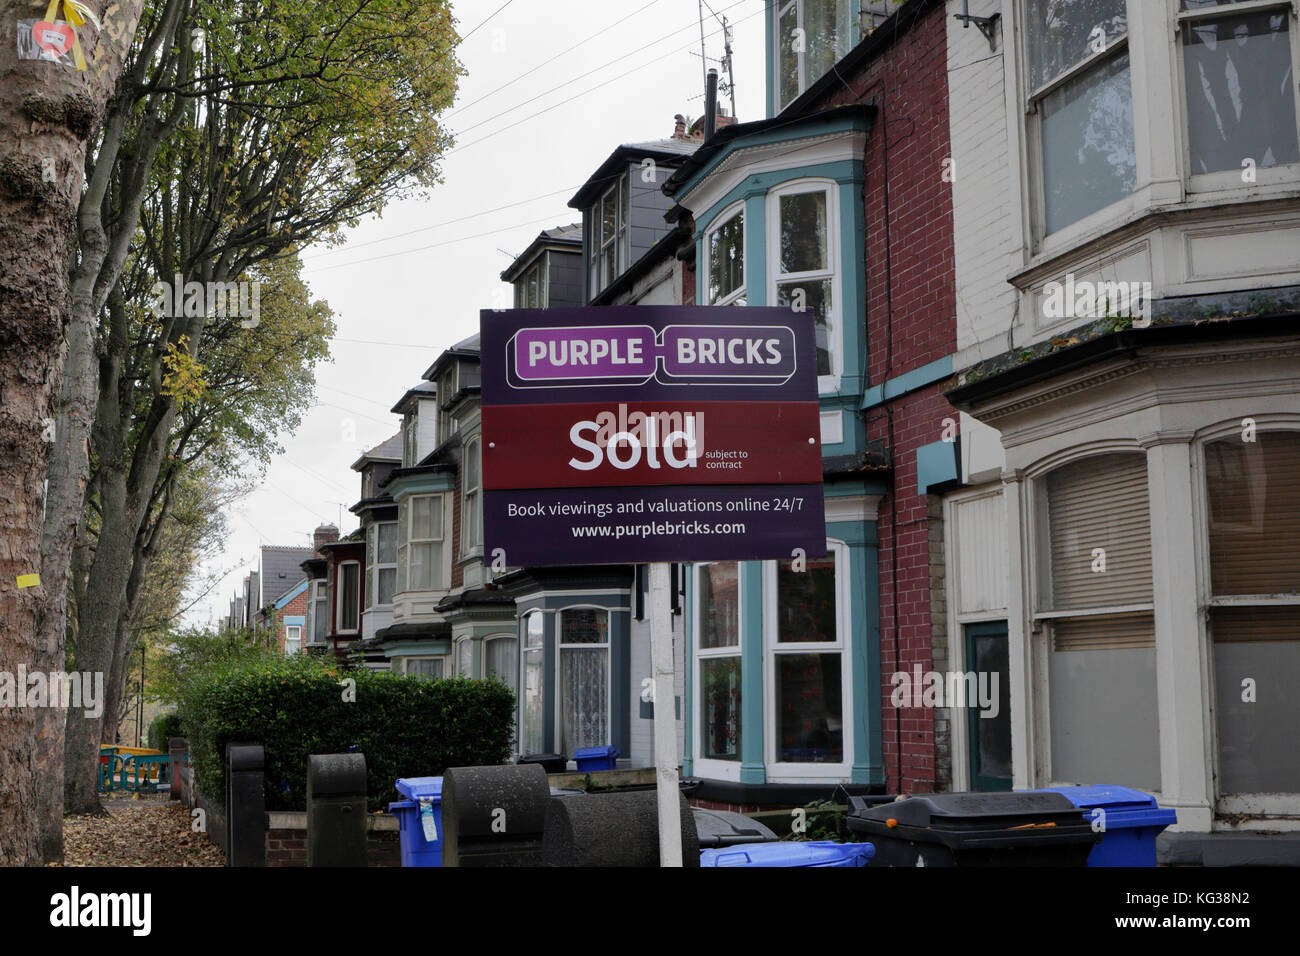 Purple Bricks sold sign, Houses in Nether Edge Sheffield UK Stock Photo